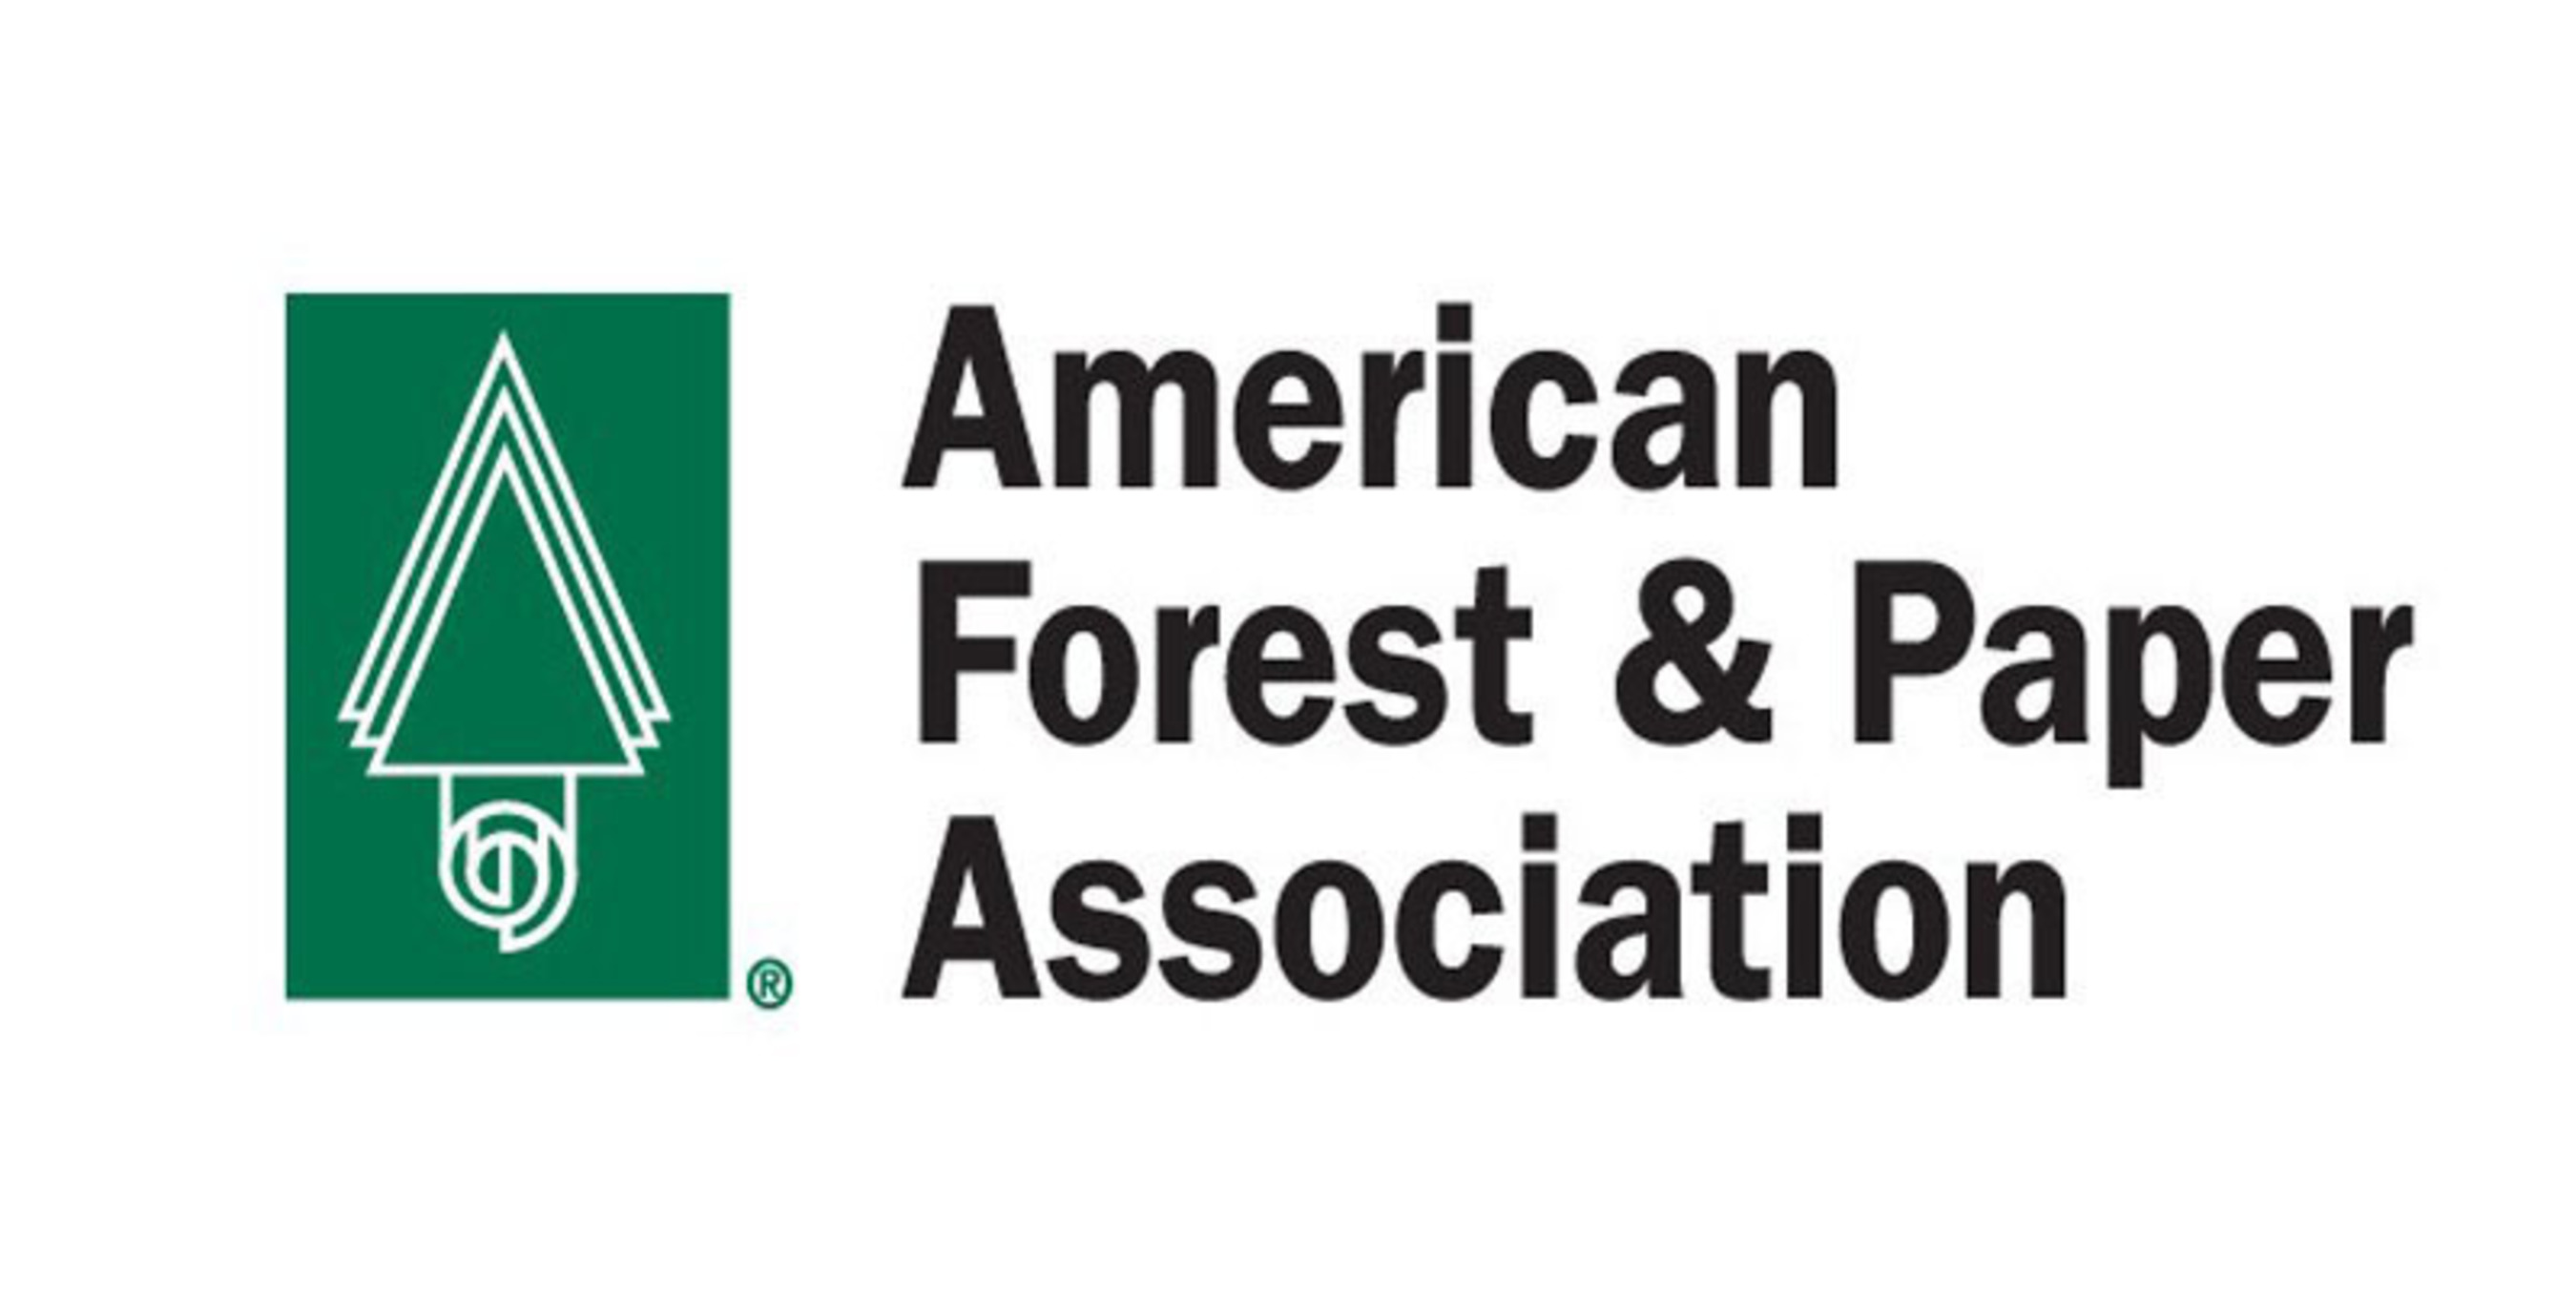 American Forest & Paper Association Logo. (PRNewsFoto/American Forest & Paper Association) (PRNewsFoto/)